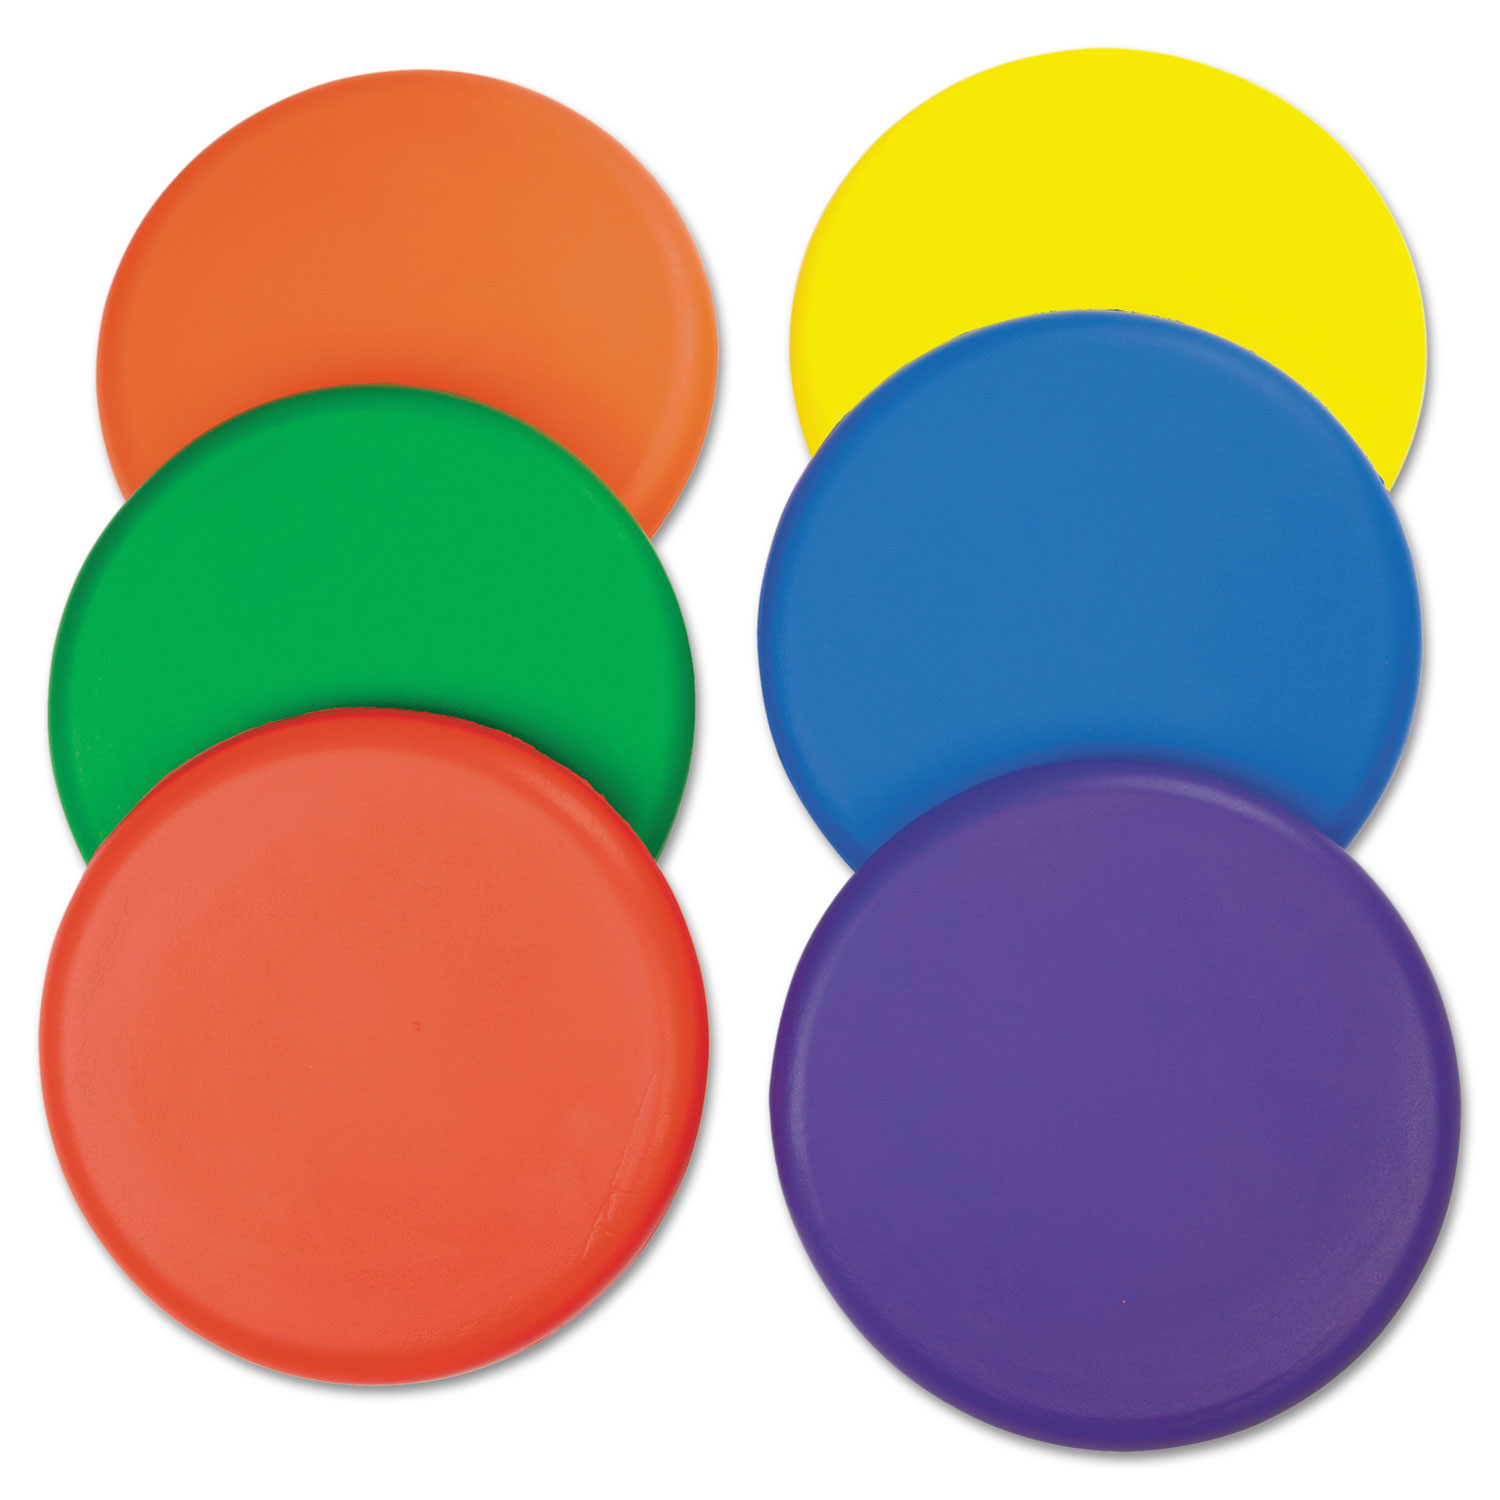 Rhino Skin Foam Discs, Set of 6 Assorted Color Discs